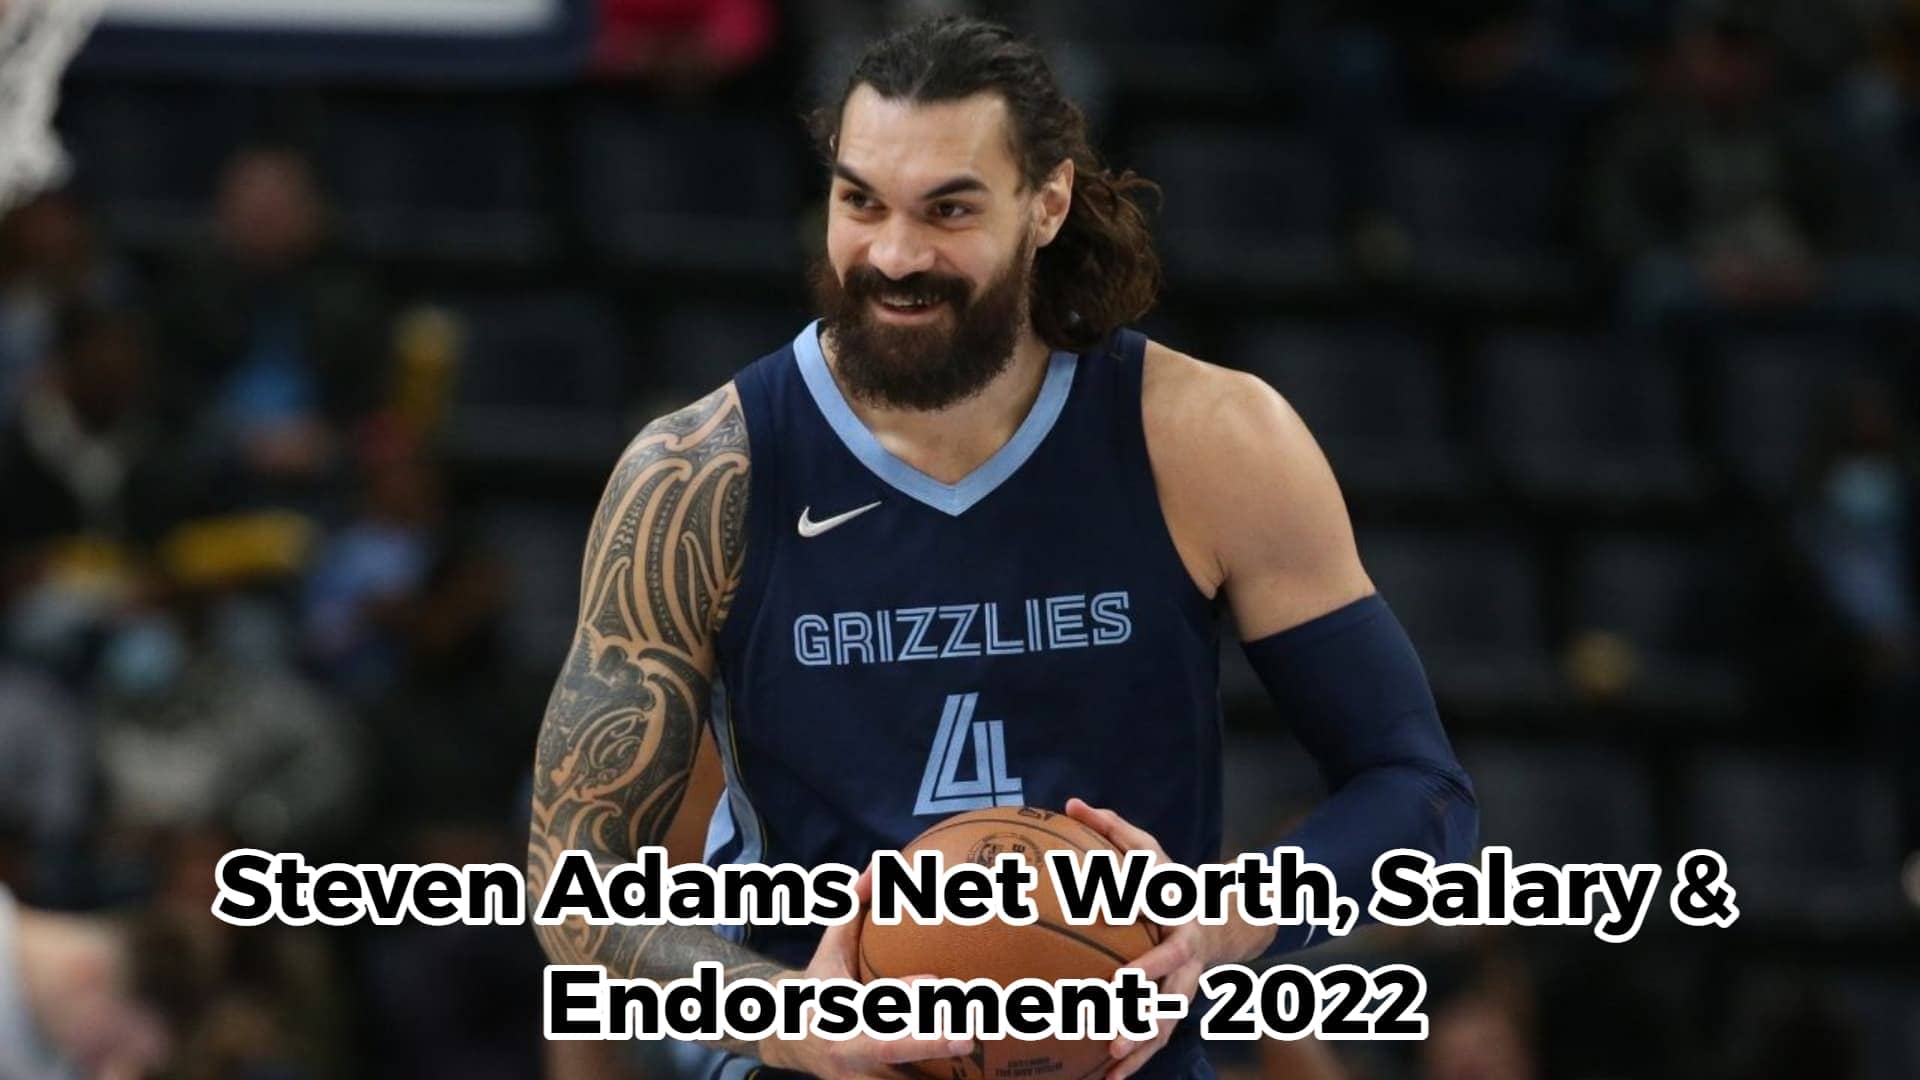 Steven Adams Net Worth, Salary & Endorsements- 2022